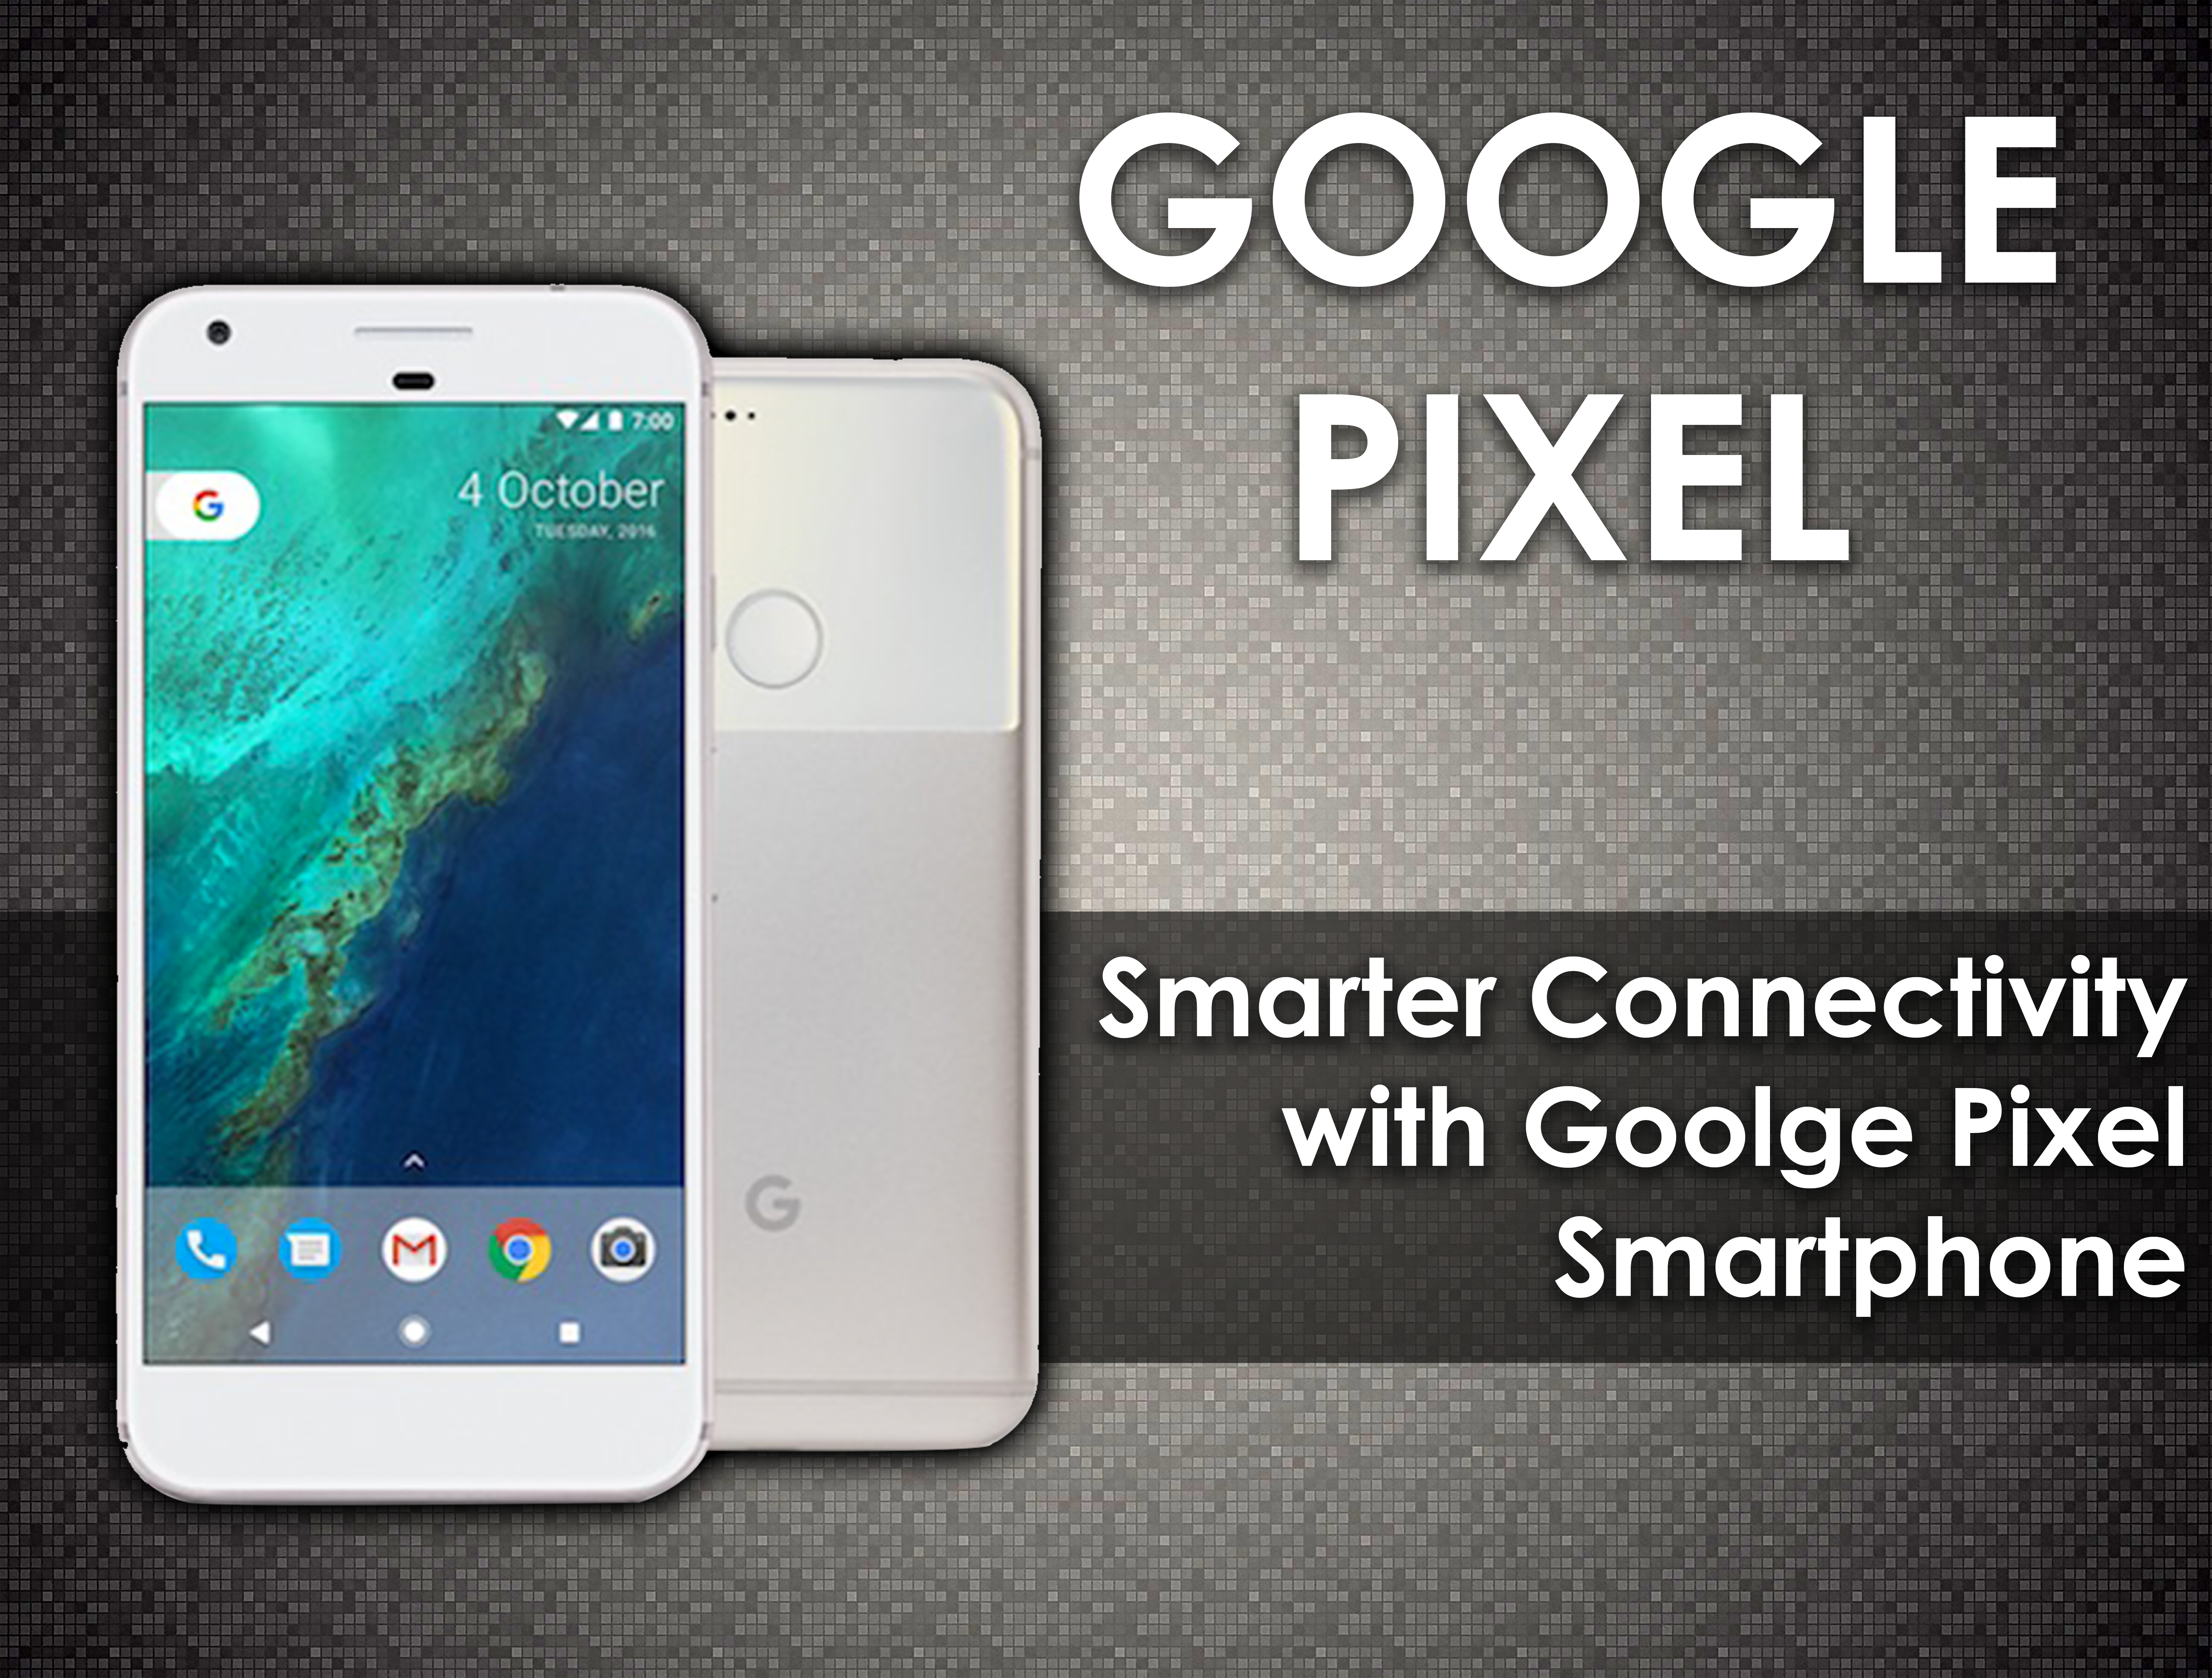 Google Pixel - A Smartphone That Amazed Everyone